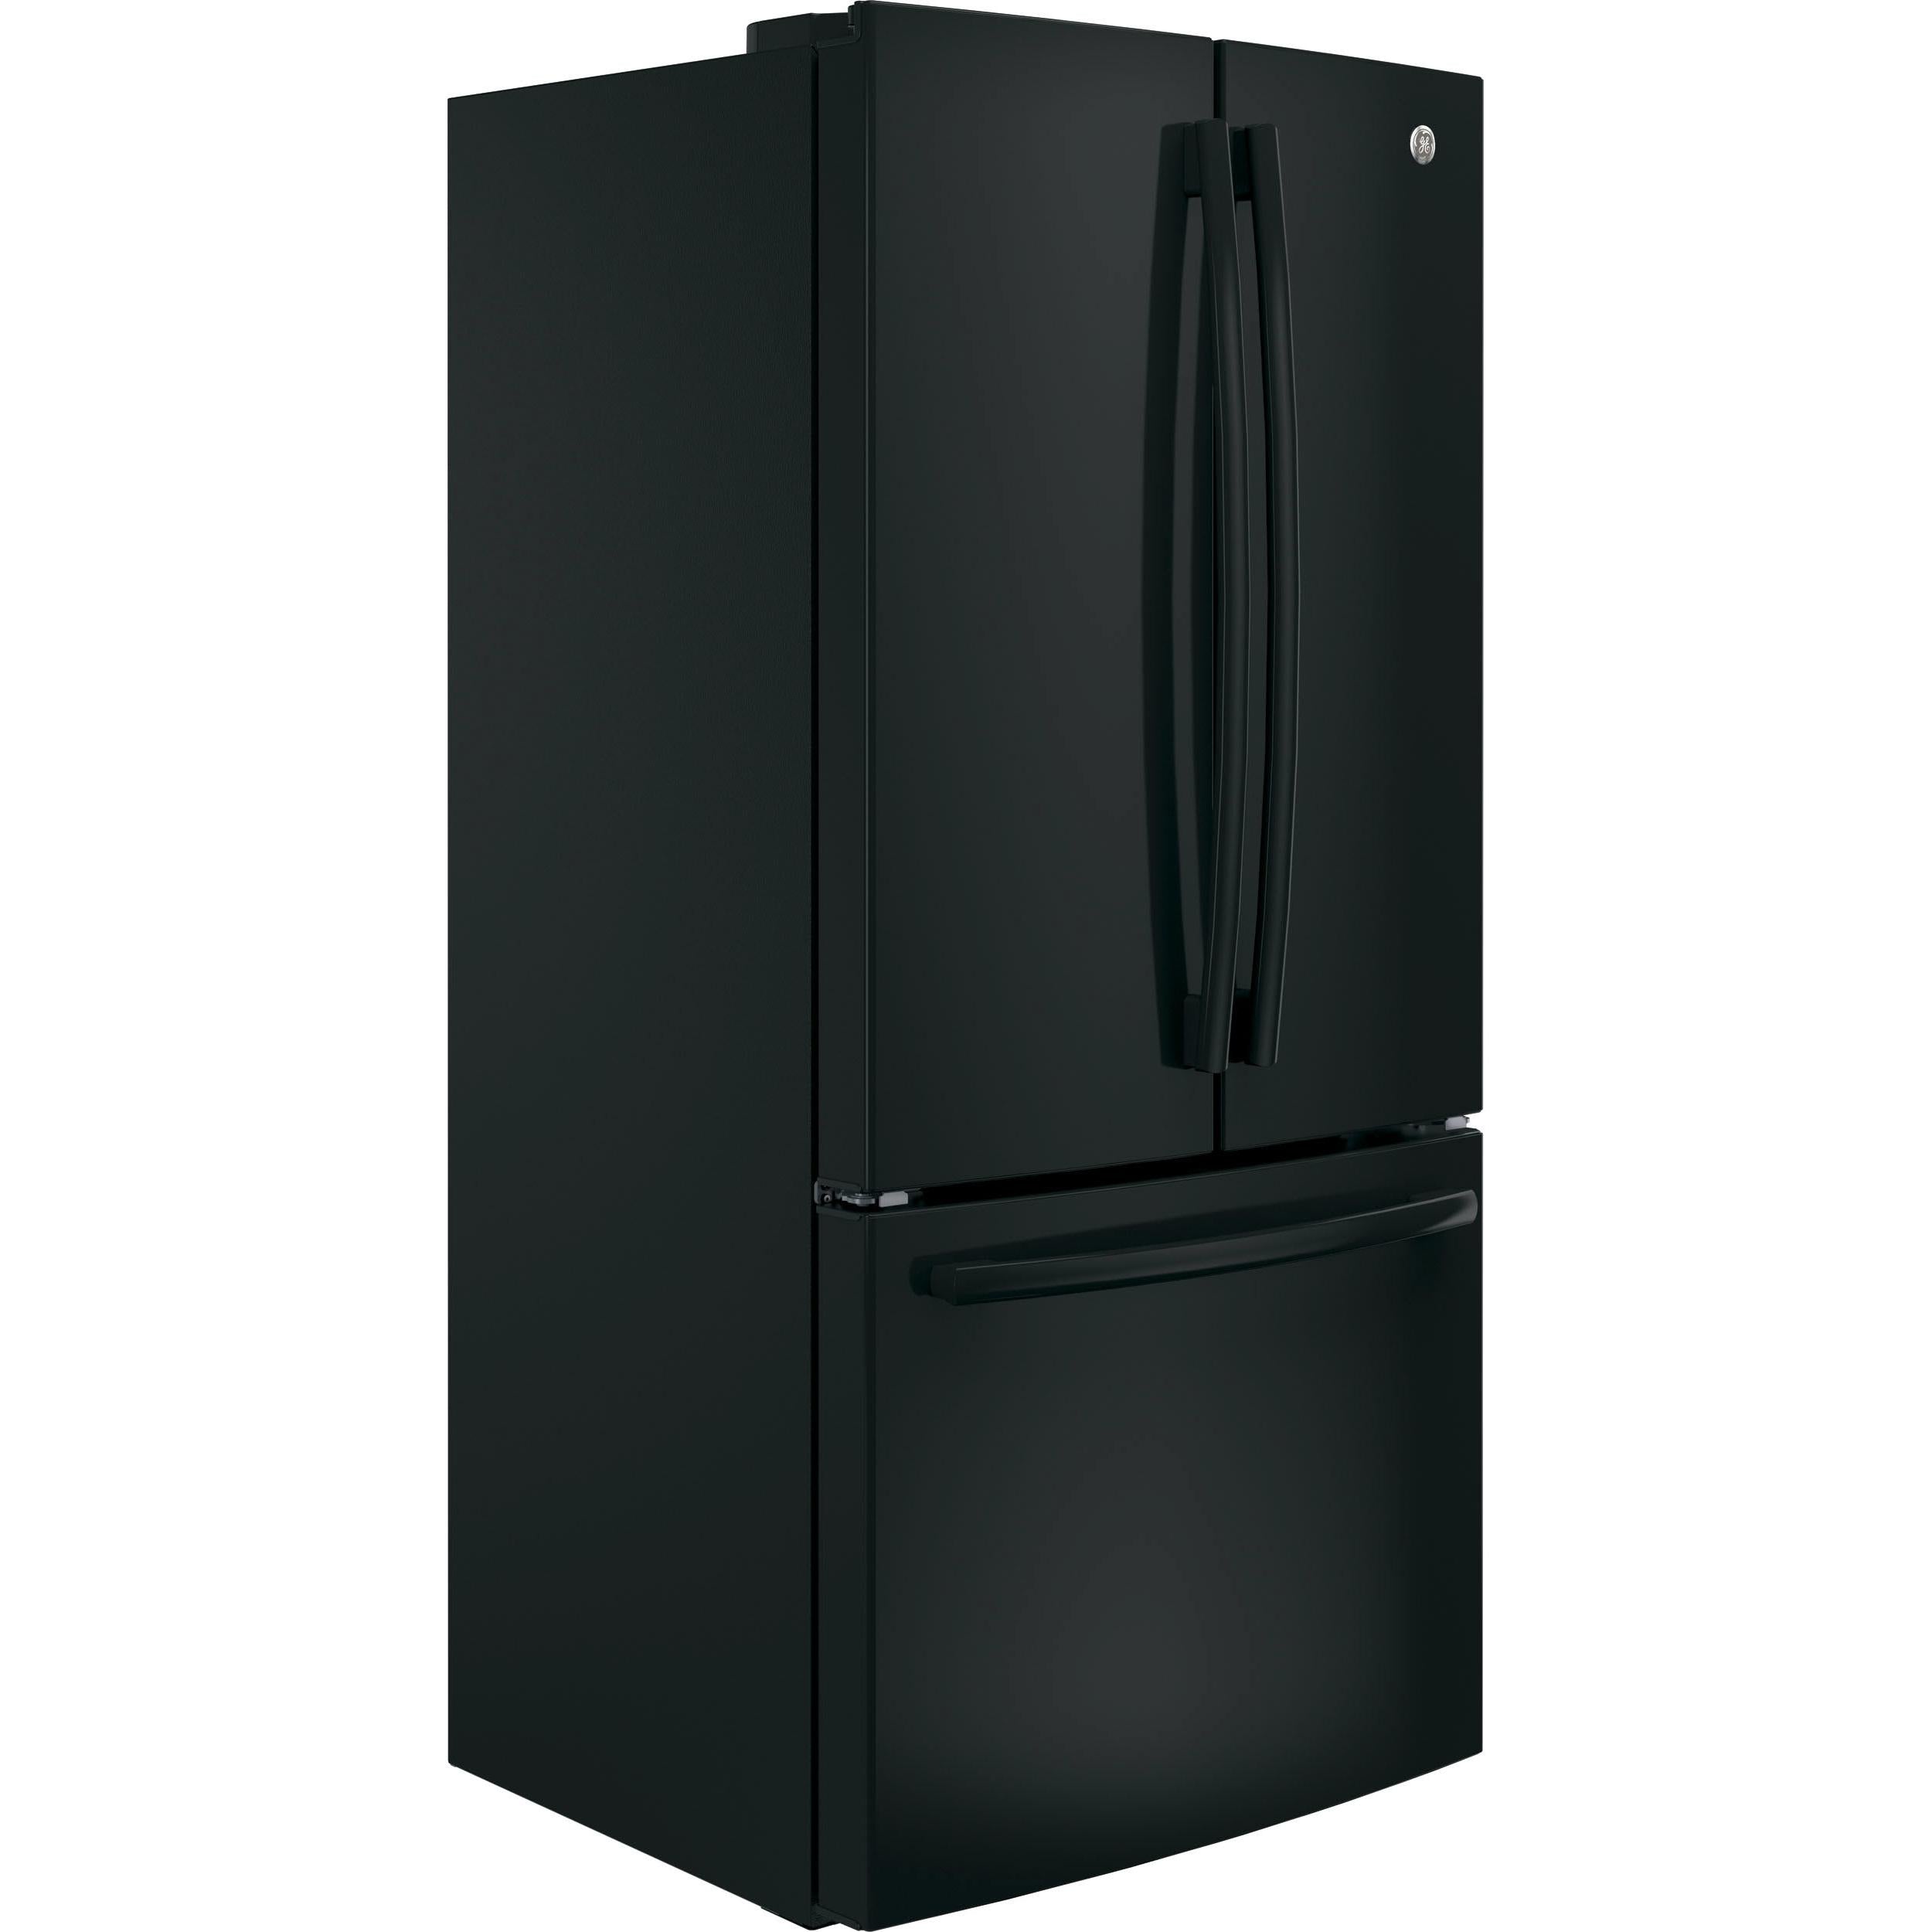 GE 33-inch, 18.6 cu. ft. Counter-Depth French-Door Refrigerator GWE19JGLBB